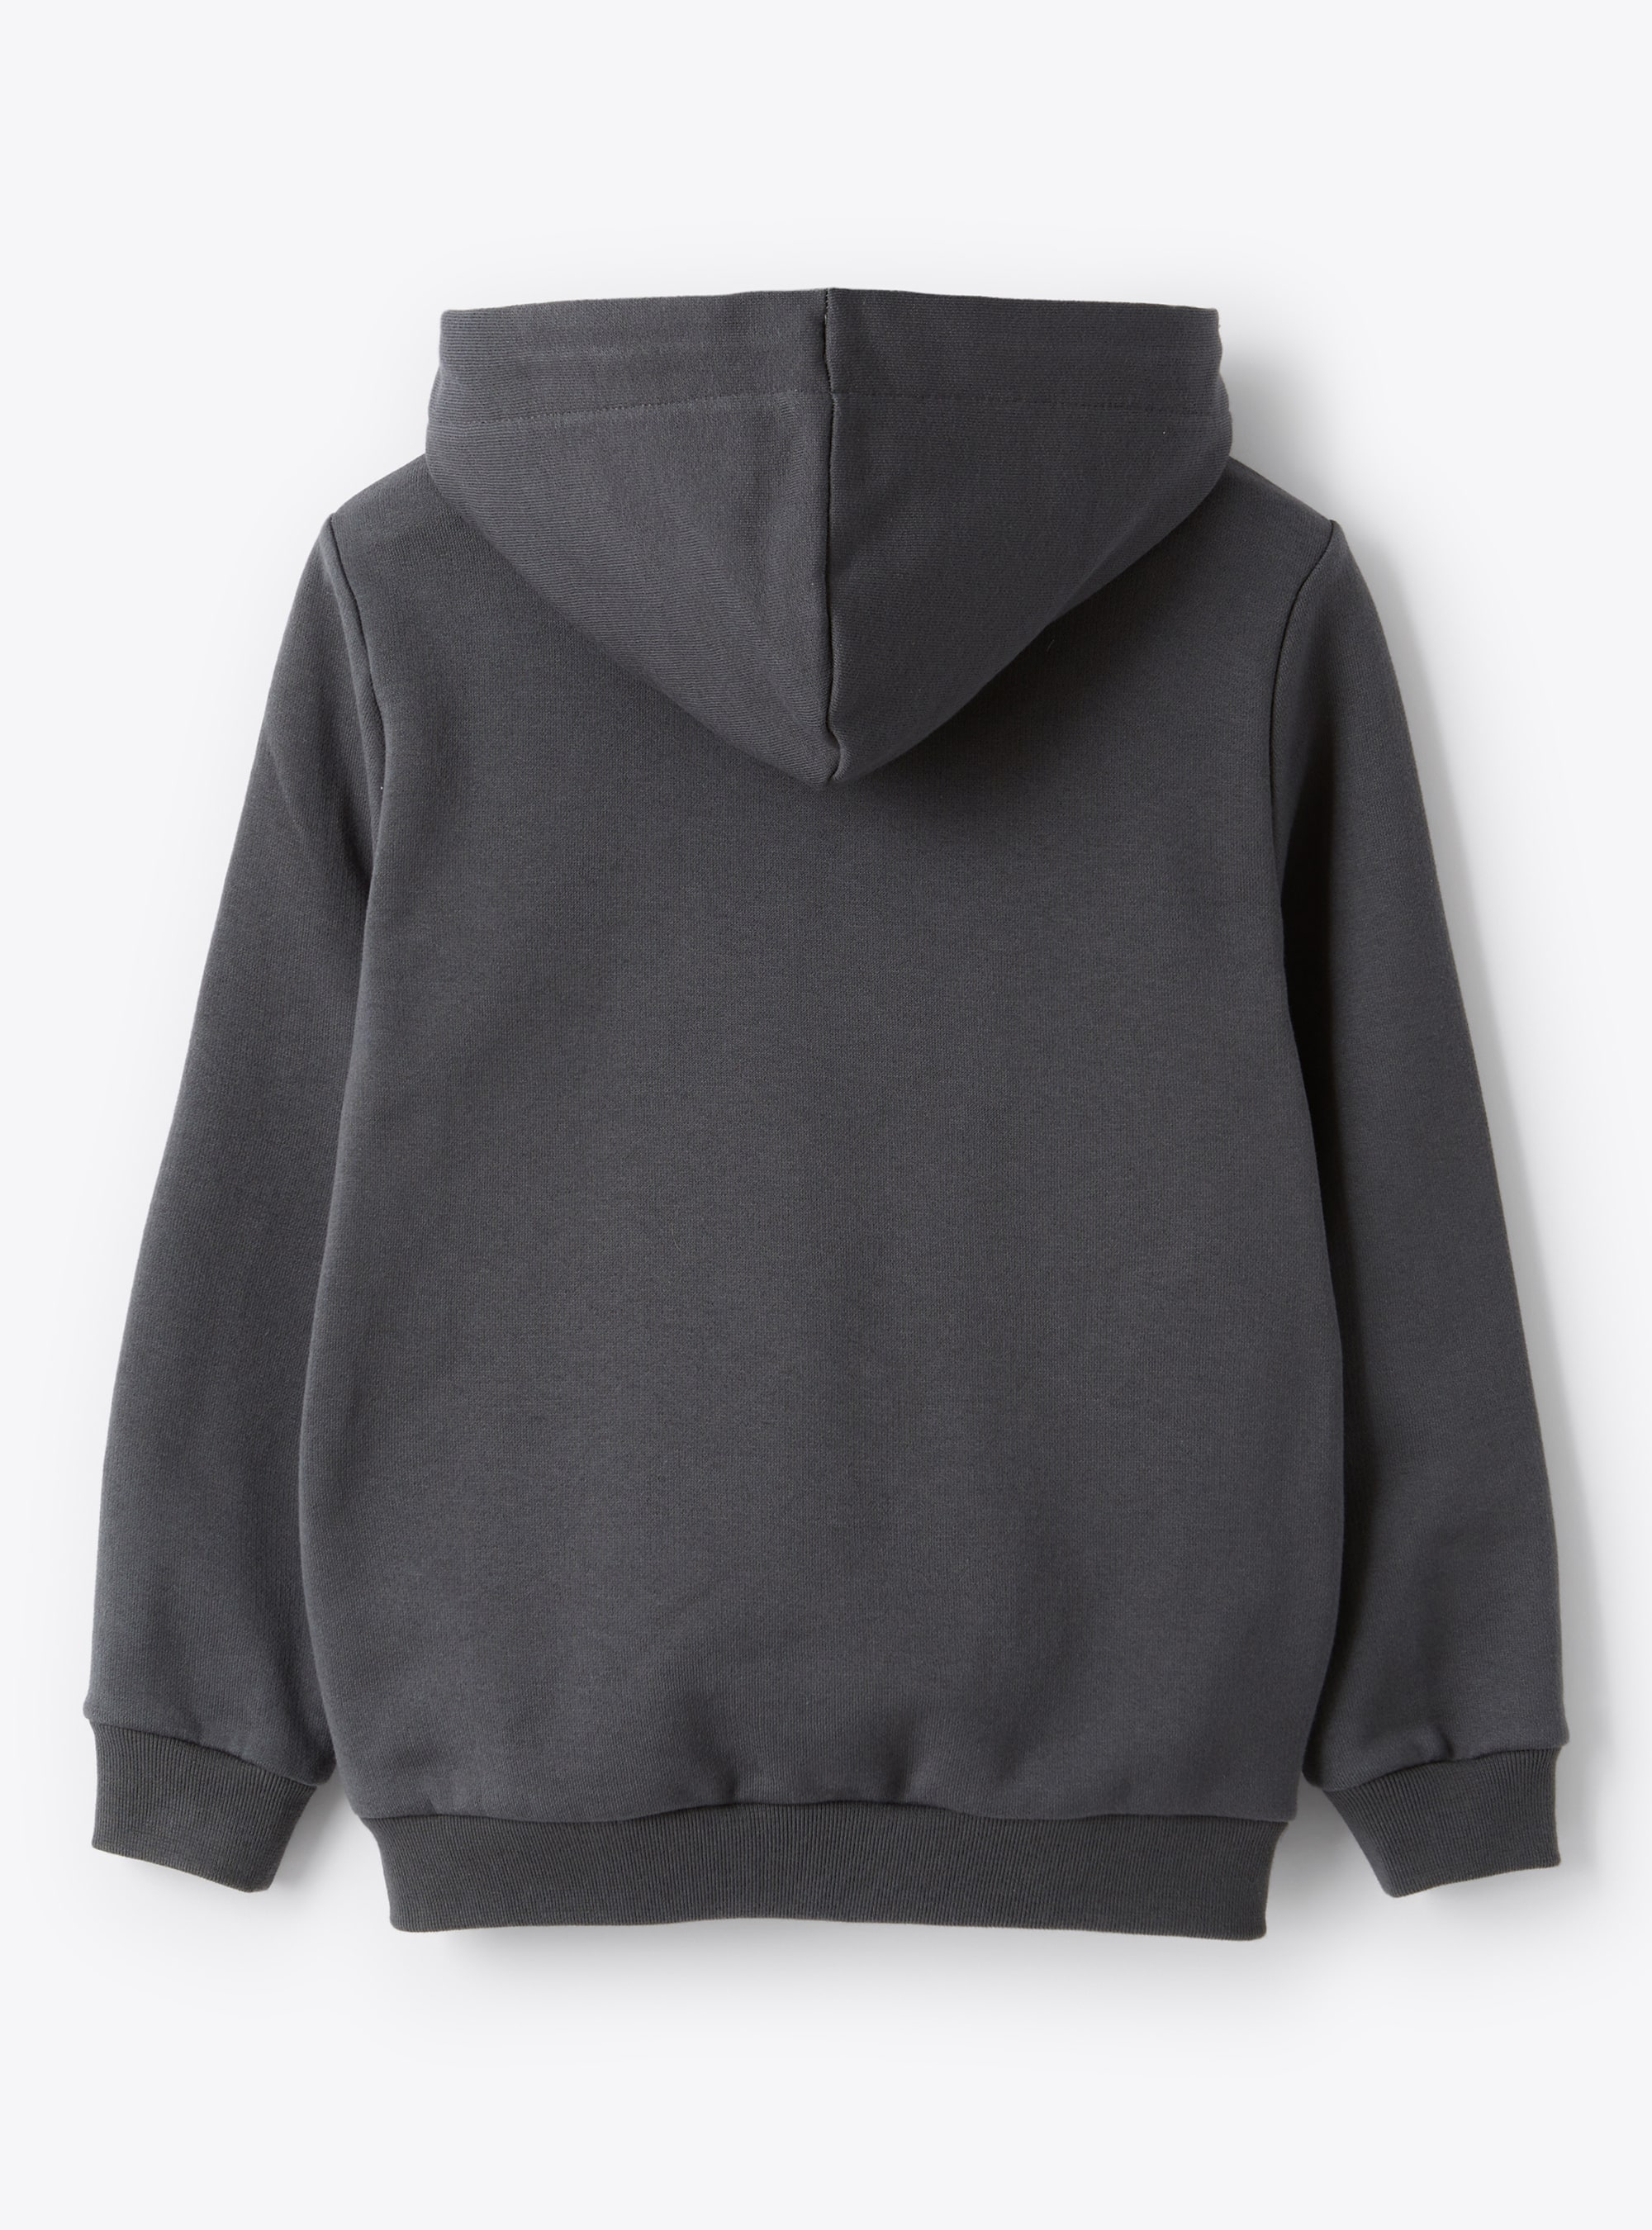 Charcoal grey hooded fleece jacket - Grey | Il Gufo